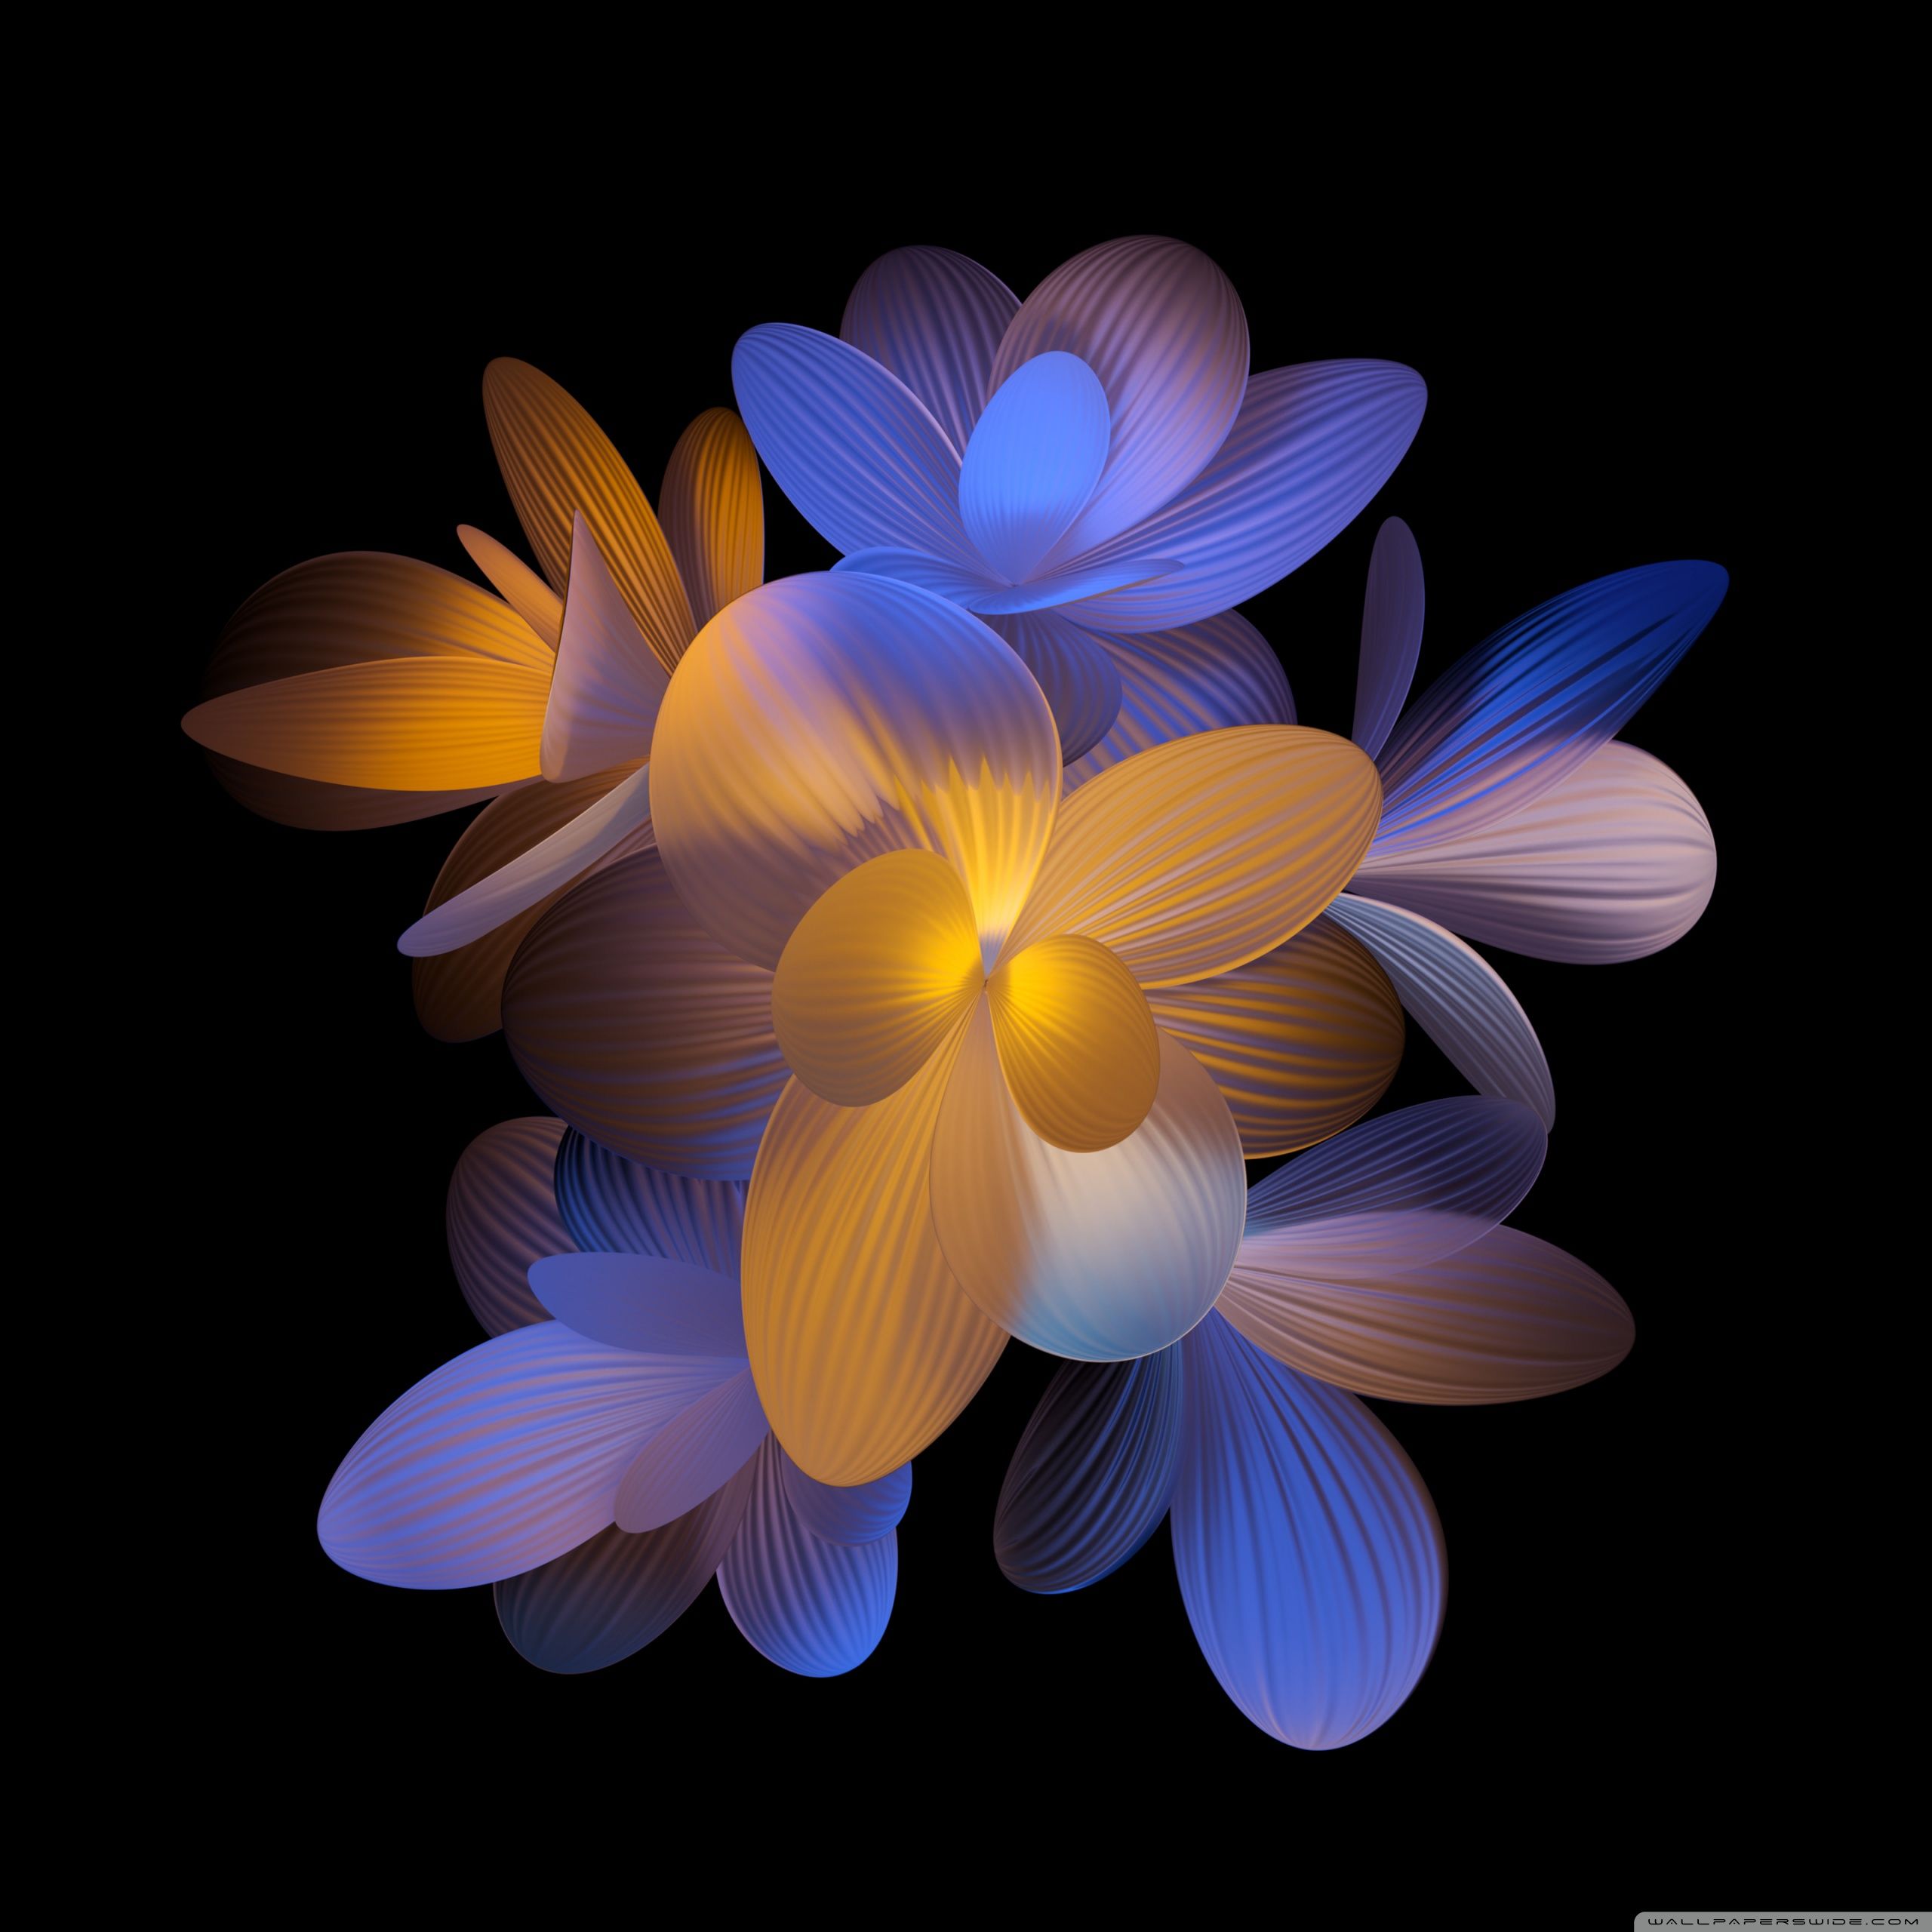  Tablet Hintergrundbild 2560x2560. Flowers Dark Aesthetic Ultra HD Desktop Background Wallpaper for : Widescreen & UltraWide Desktop & Laptop : Multi Display, Dual & Triple Monitor : Tablet